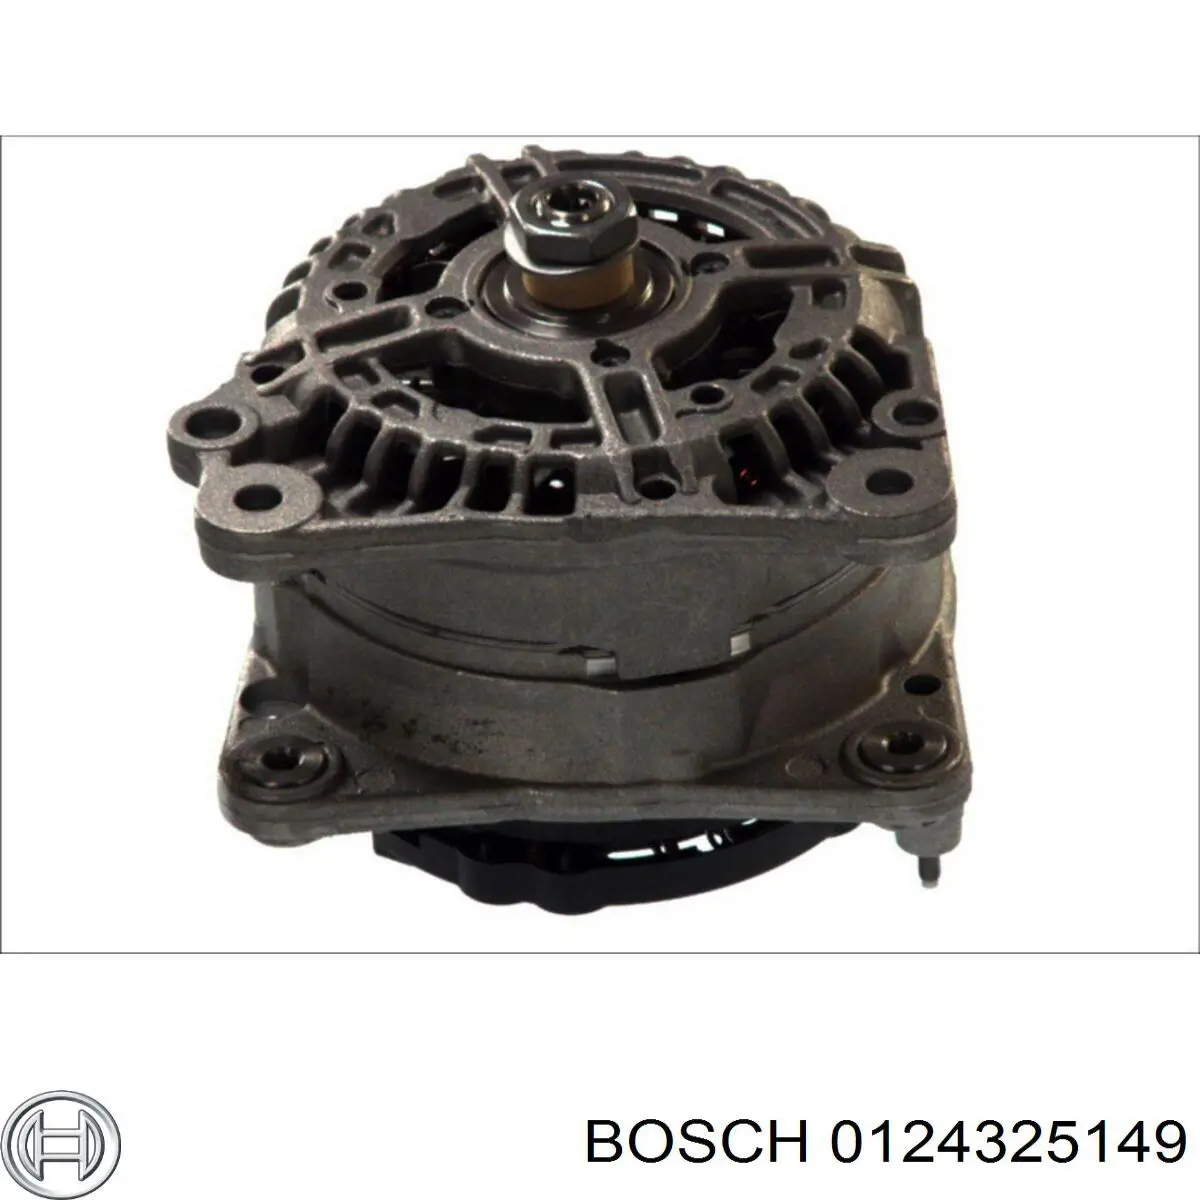 0124325149 Bosch alternador